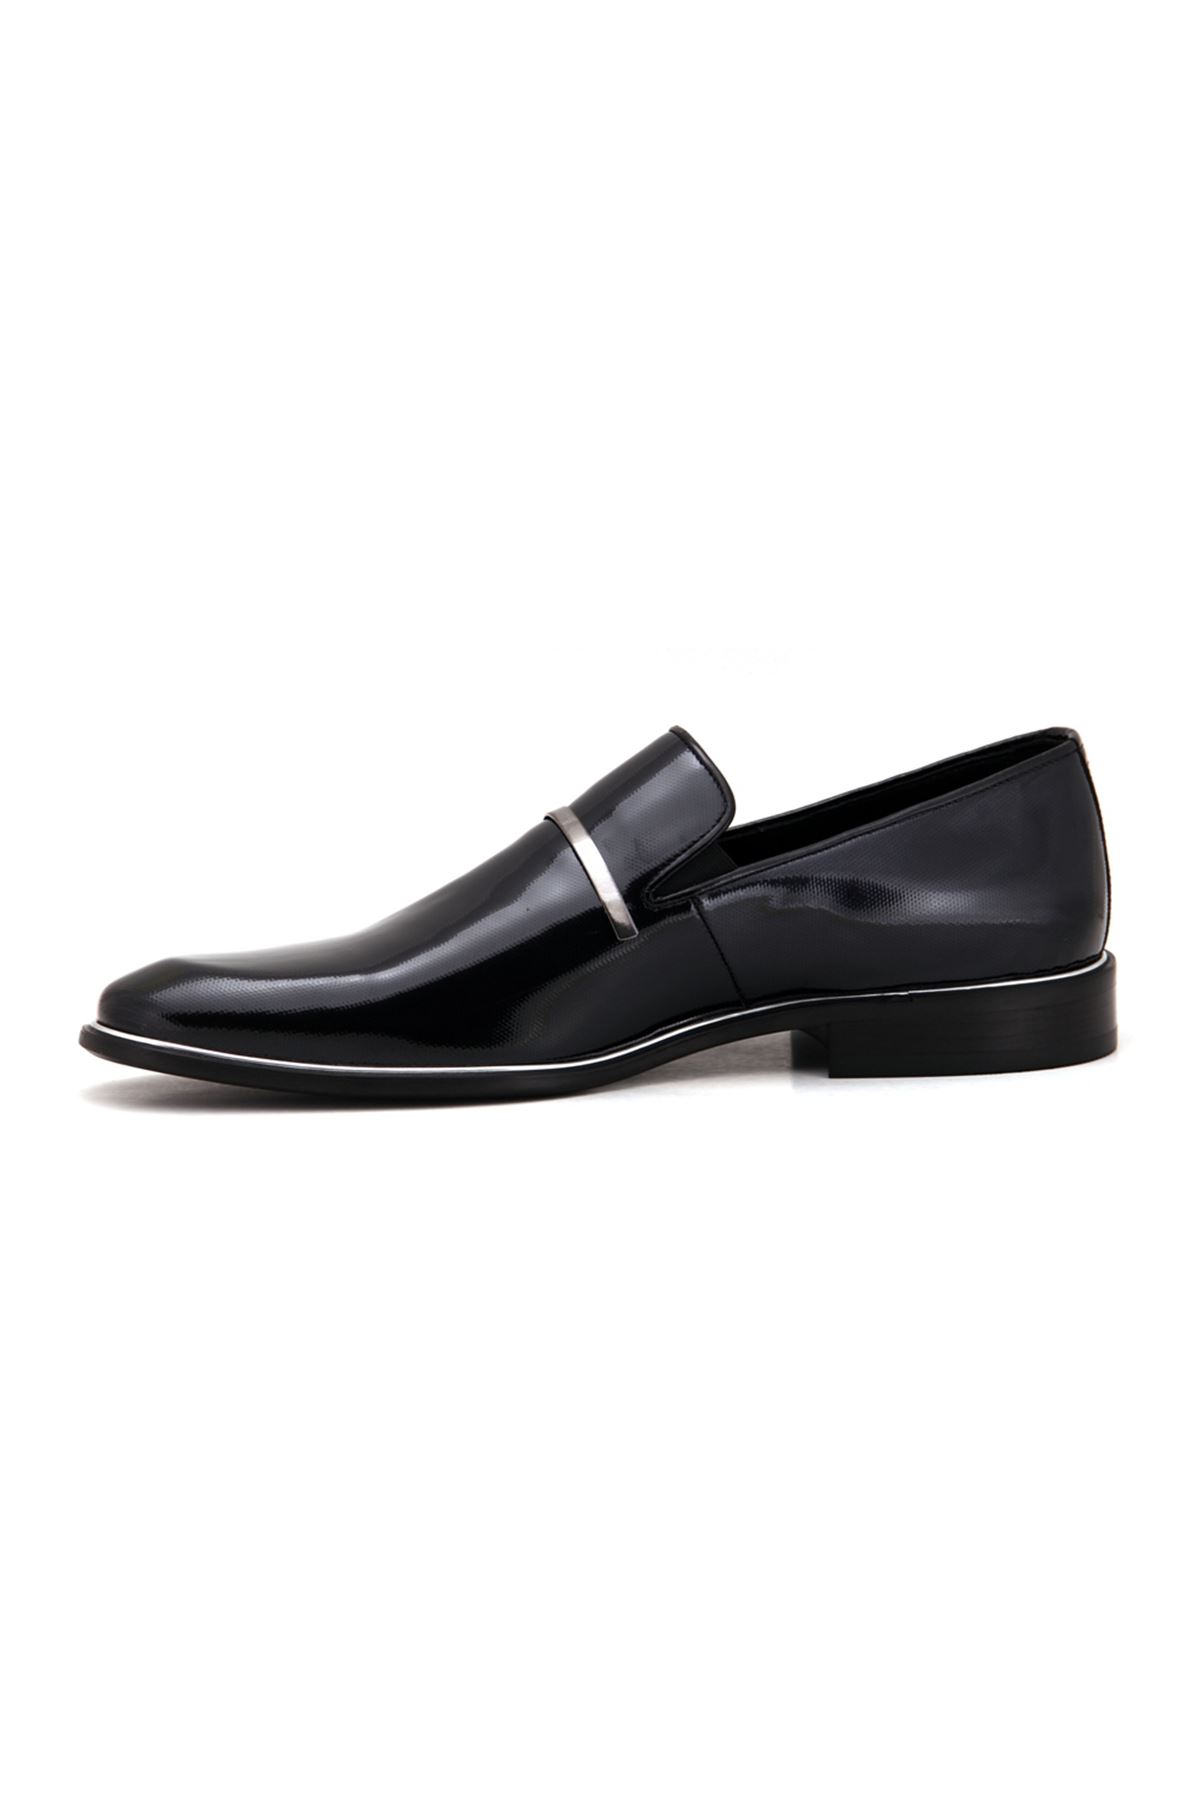 2384 Libero Klasik Erkek Ayakkabı - Siyah Rugan